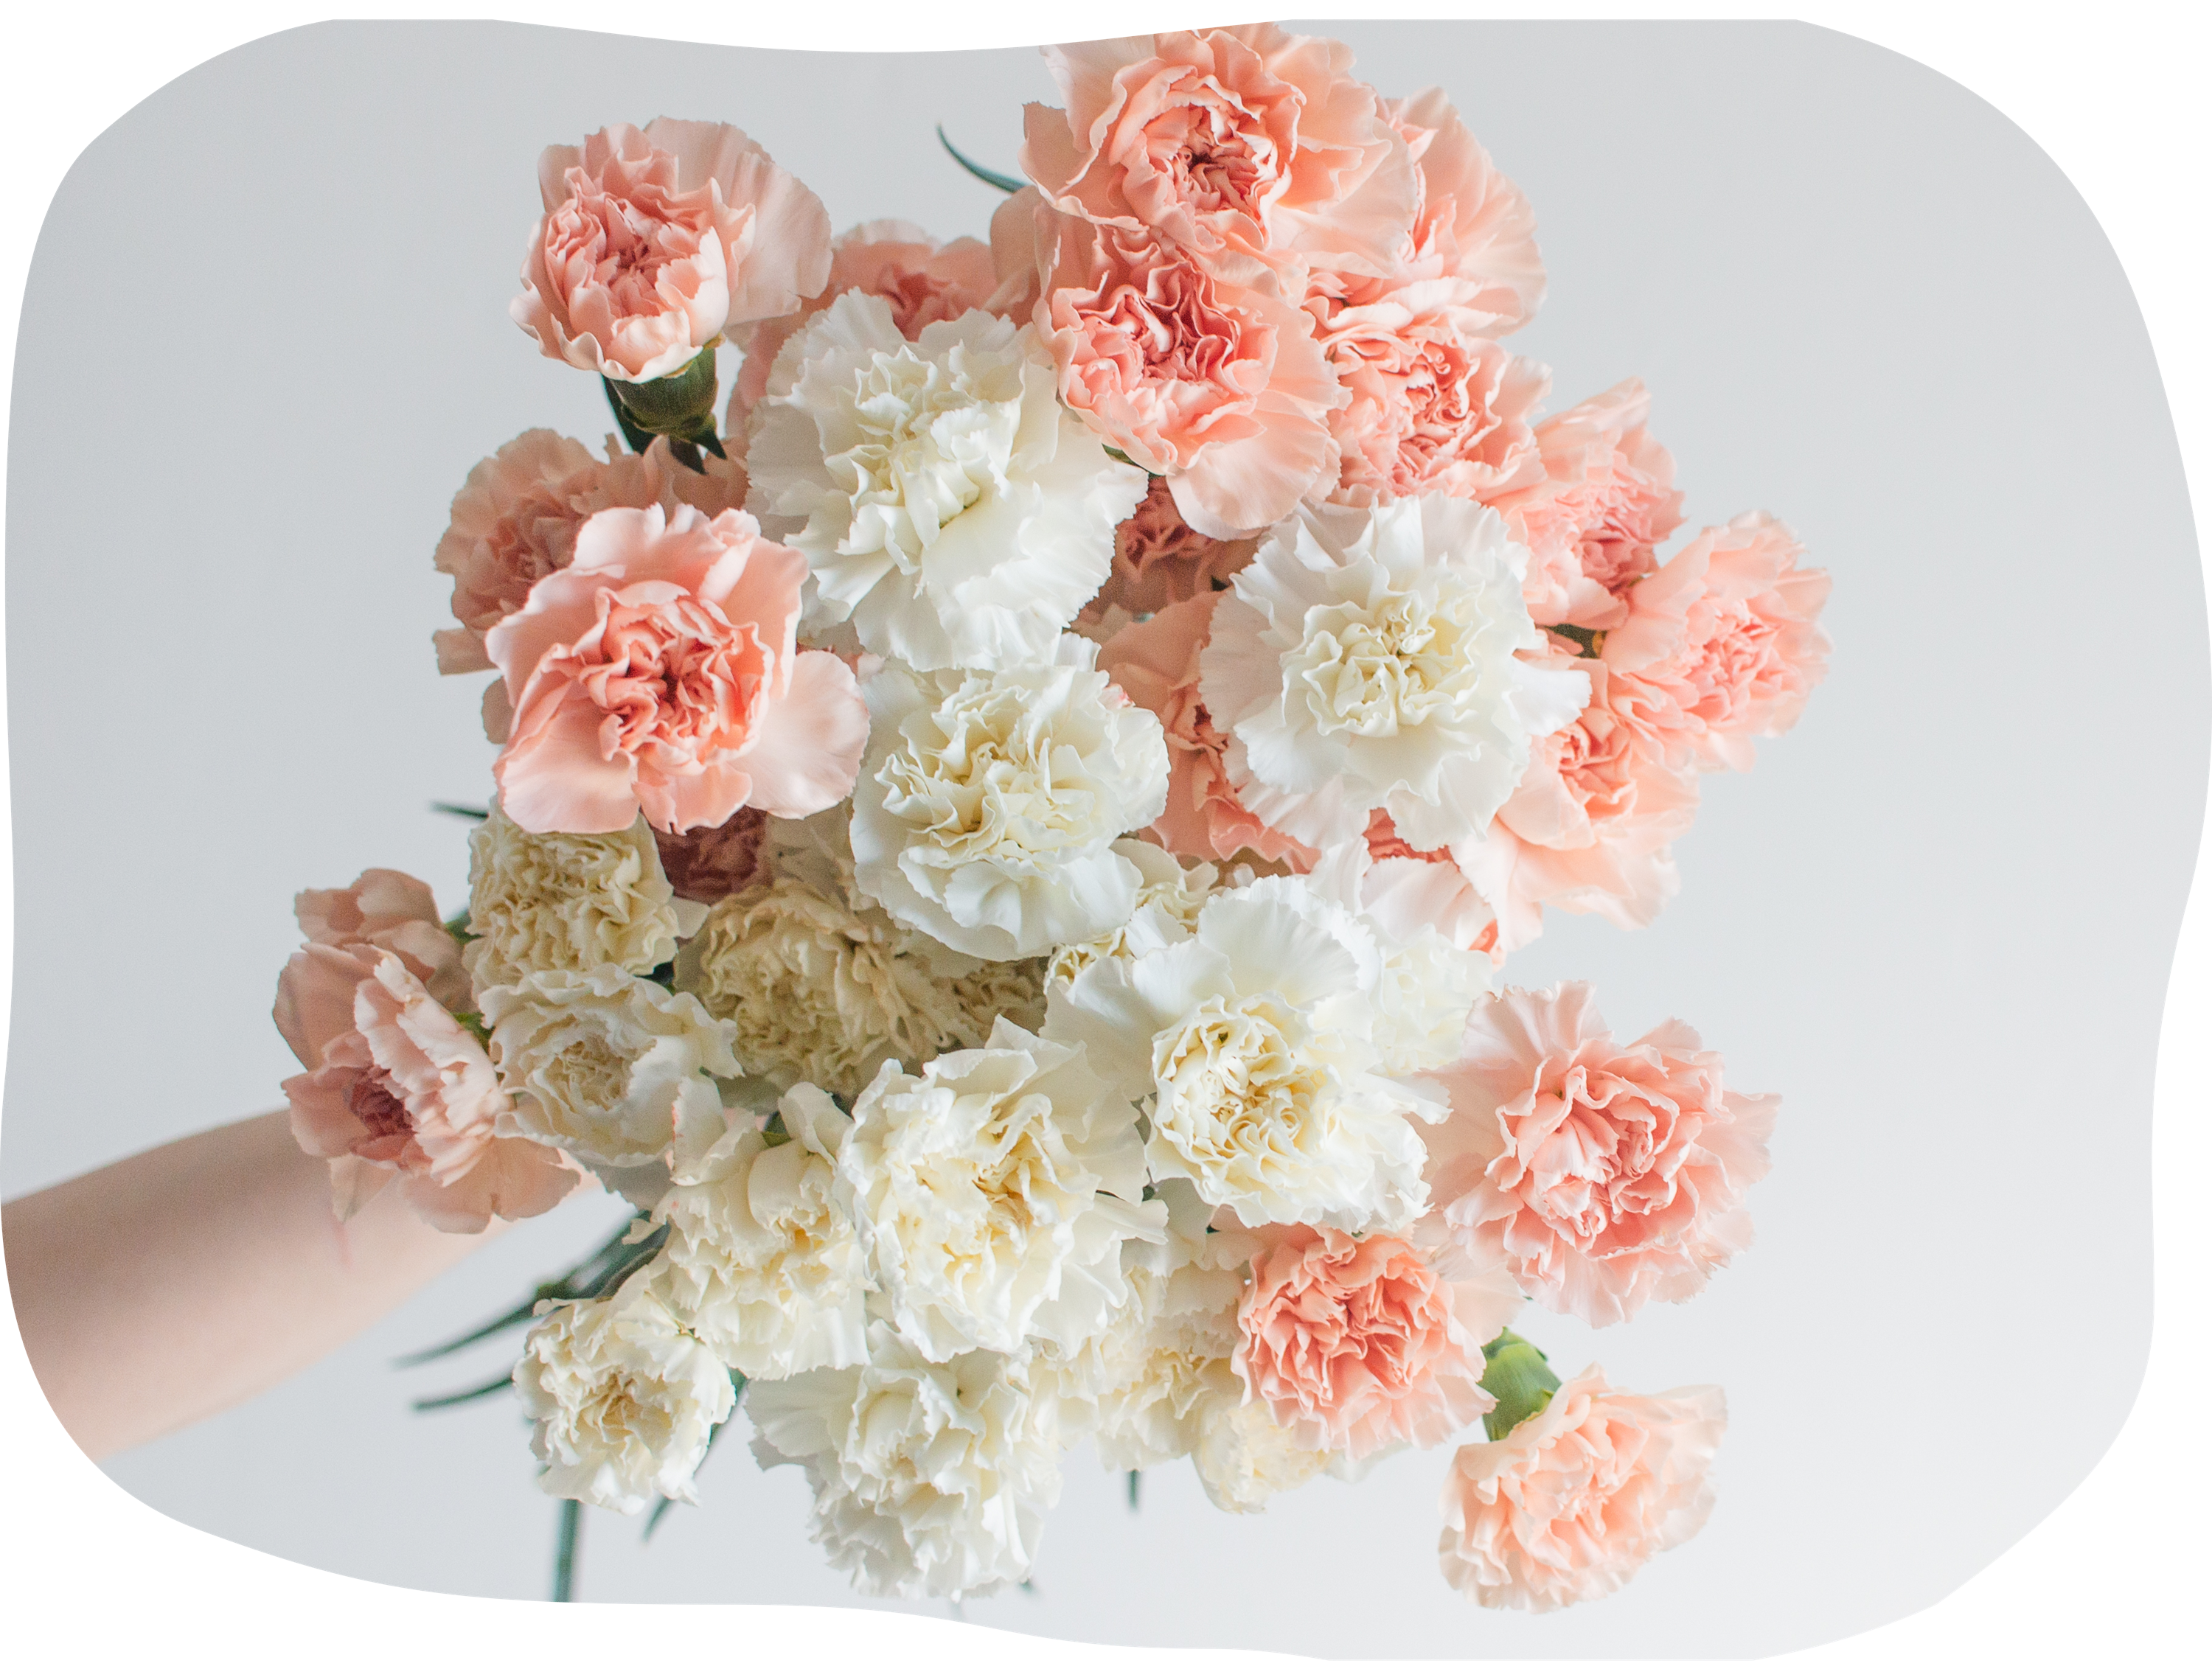 Pale Yellow Carnations, Bulk DIY Wedding Flowers, Flower Moxie